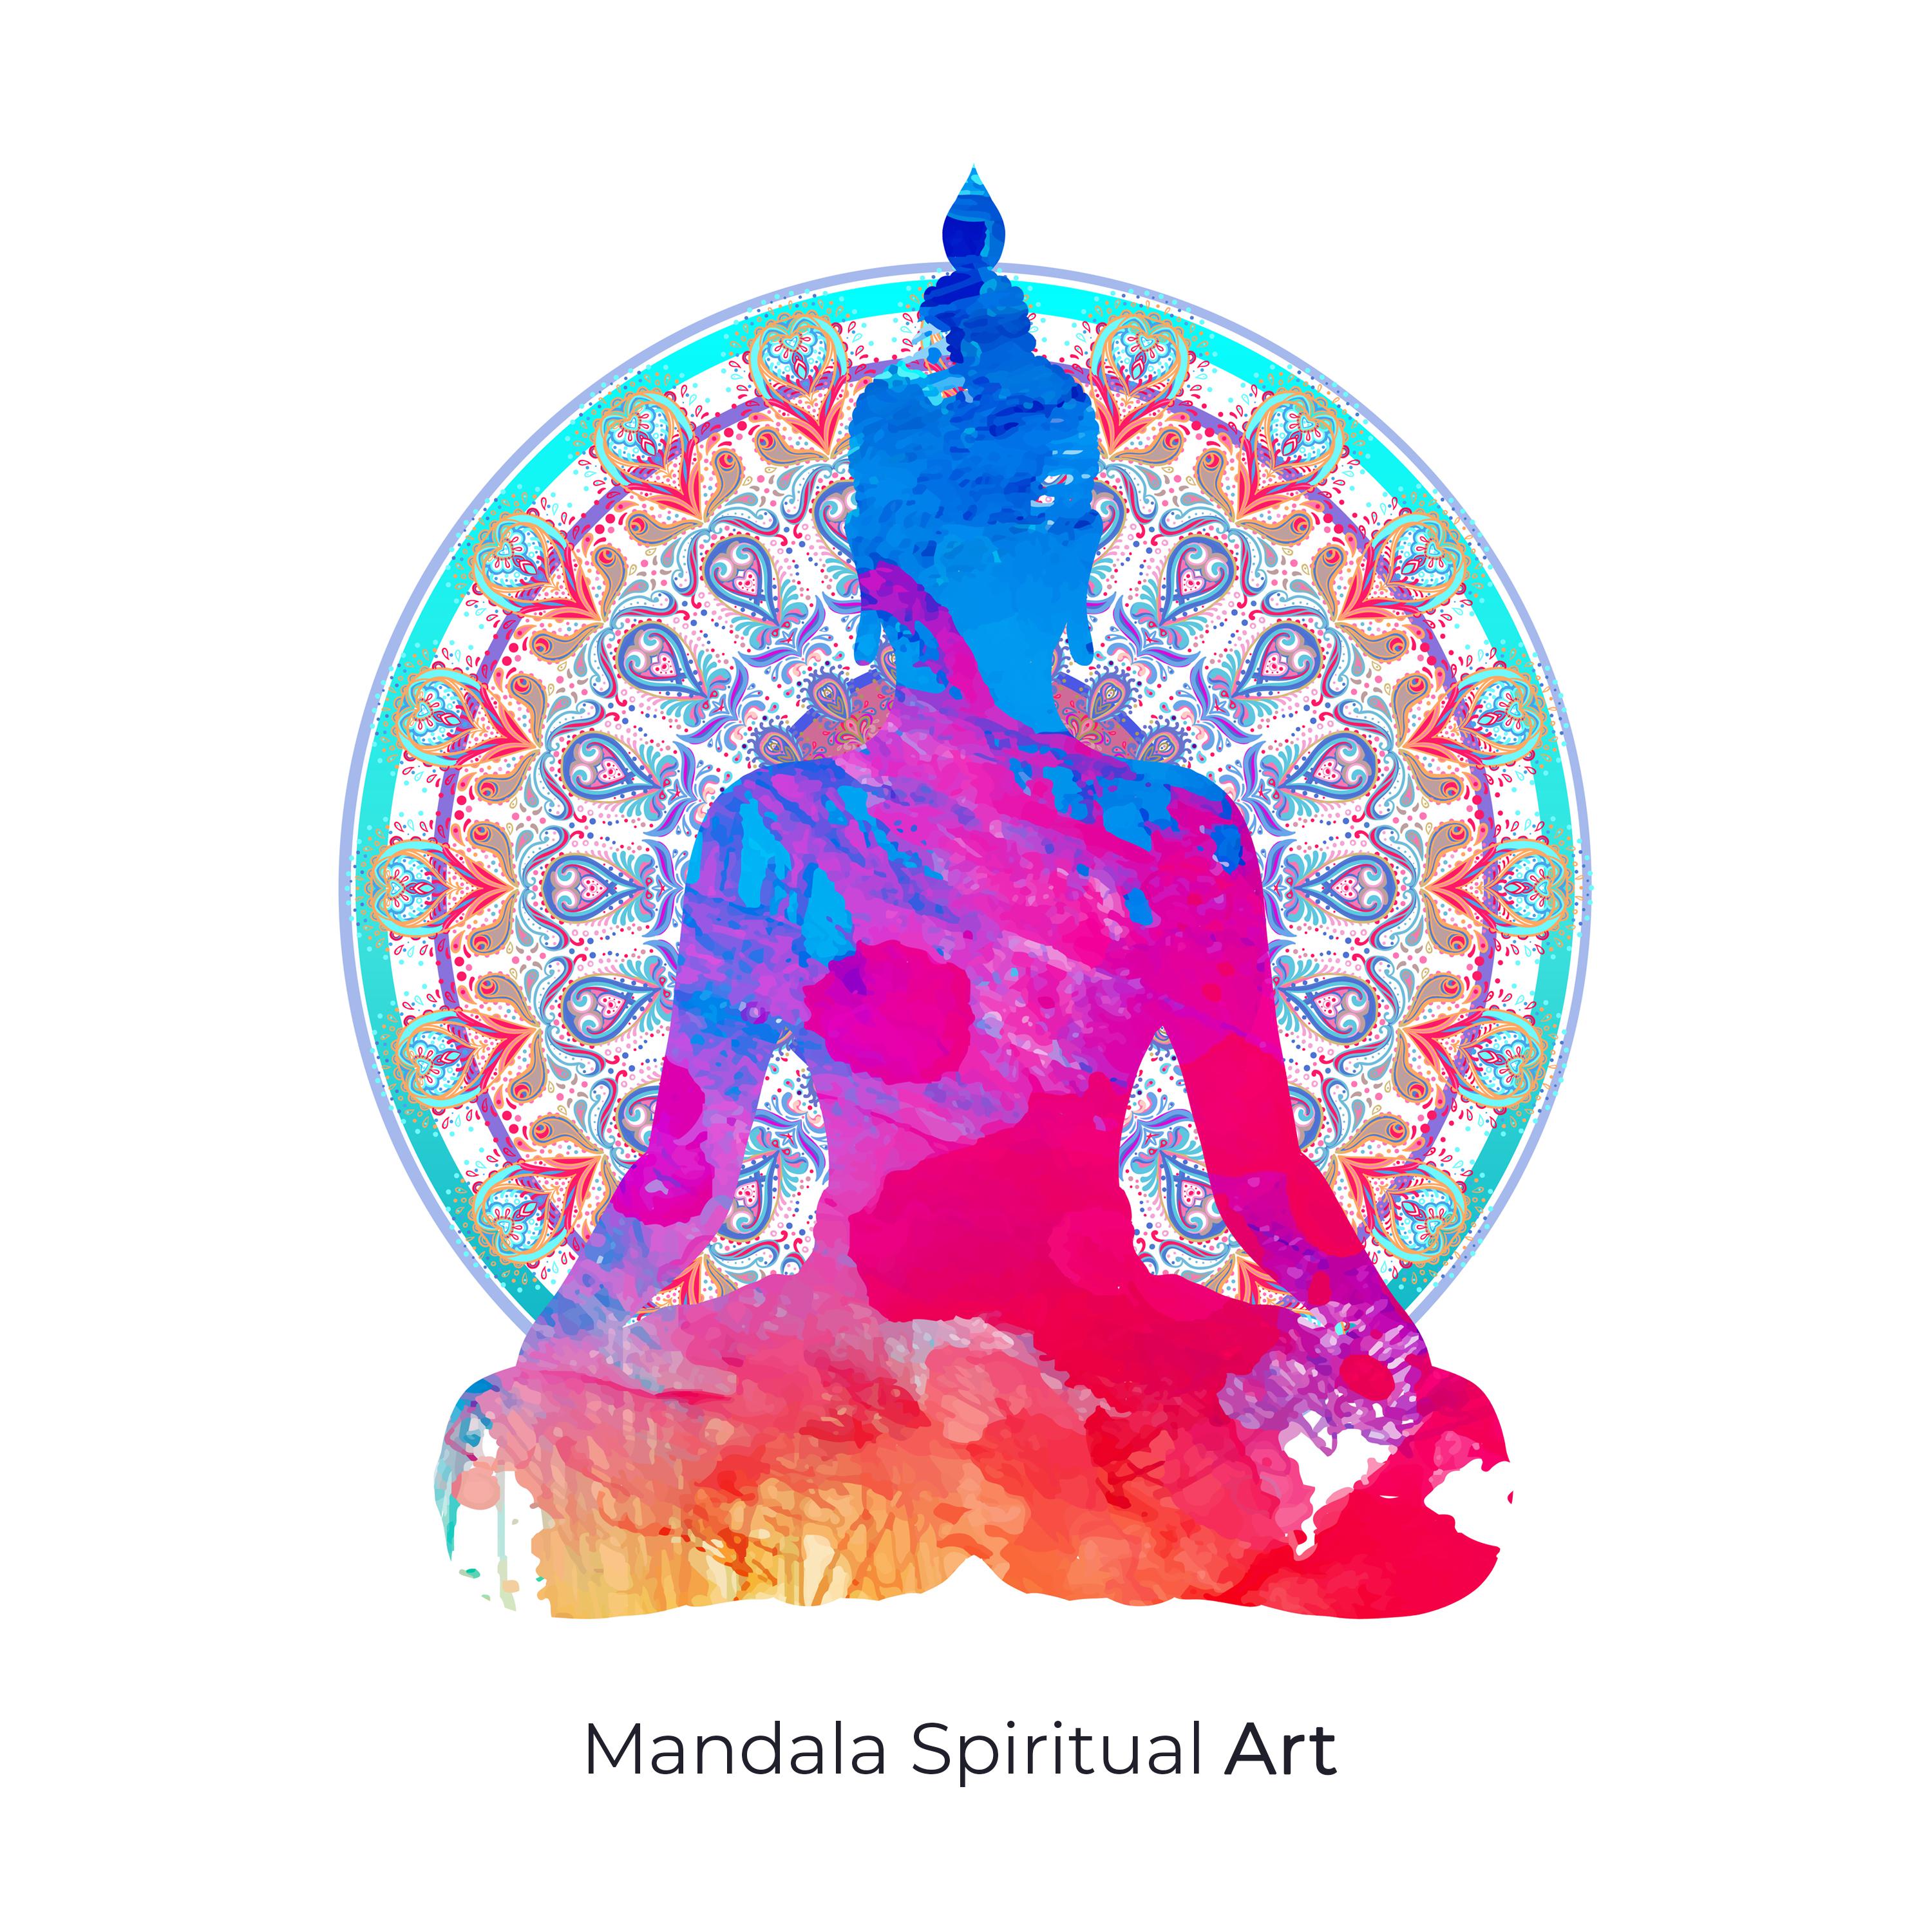 Mandala Spiritual Art (Meditation Music for Relaxation, Yoga, Inner Balance, Healing Body, Mind and Soul)